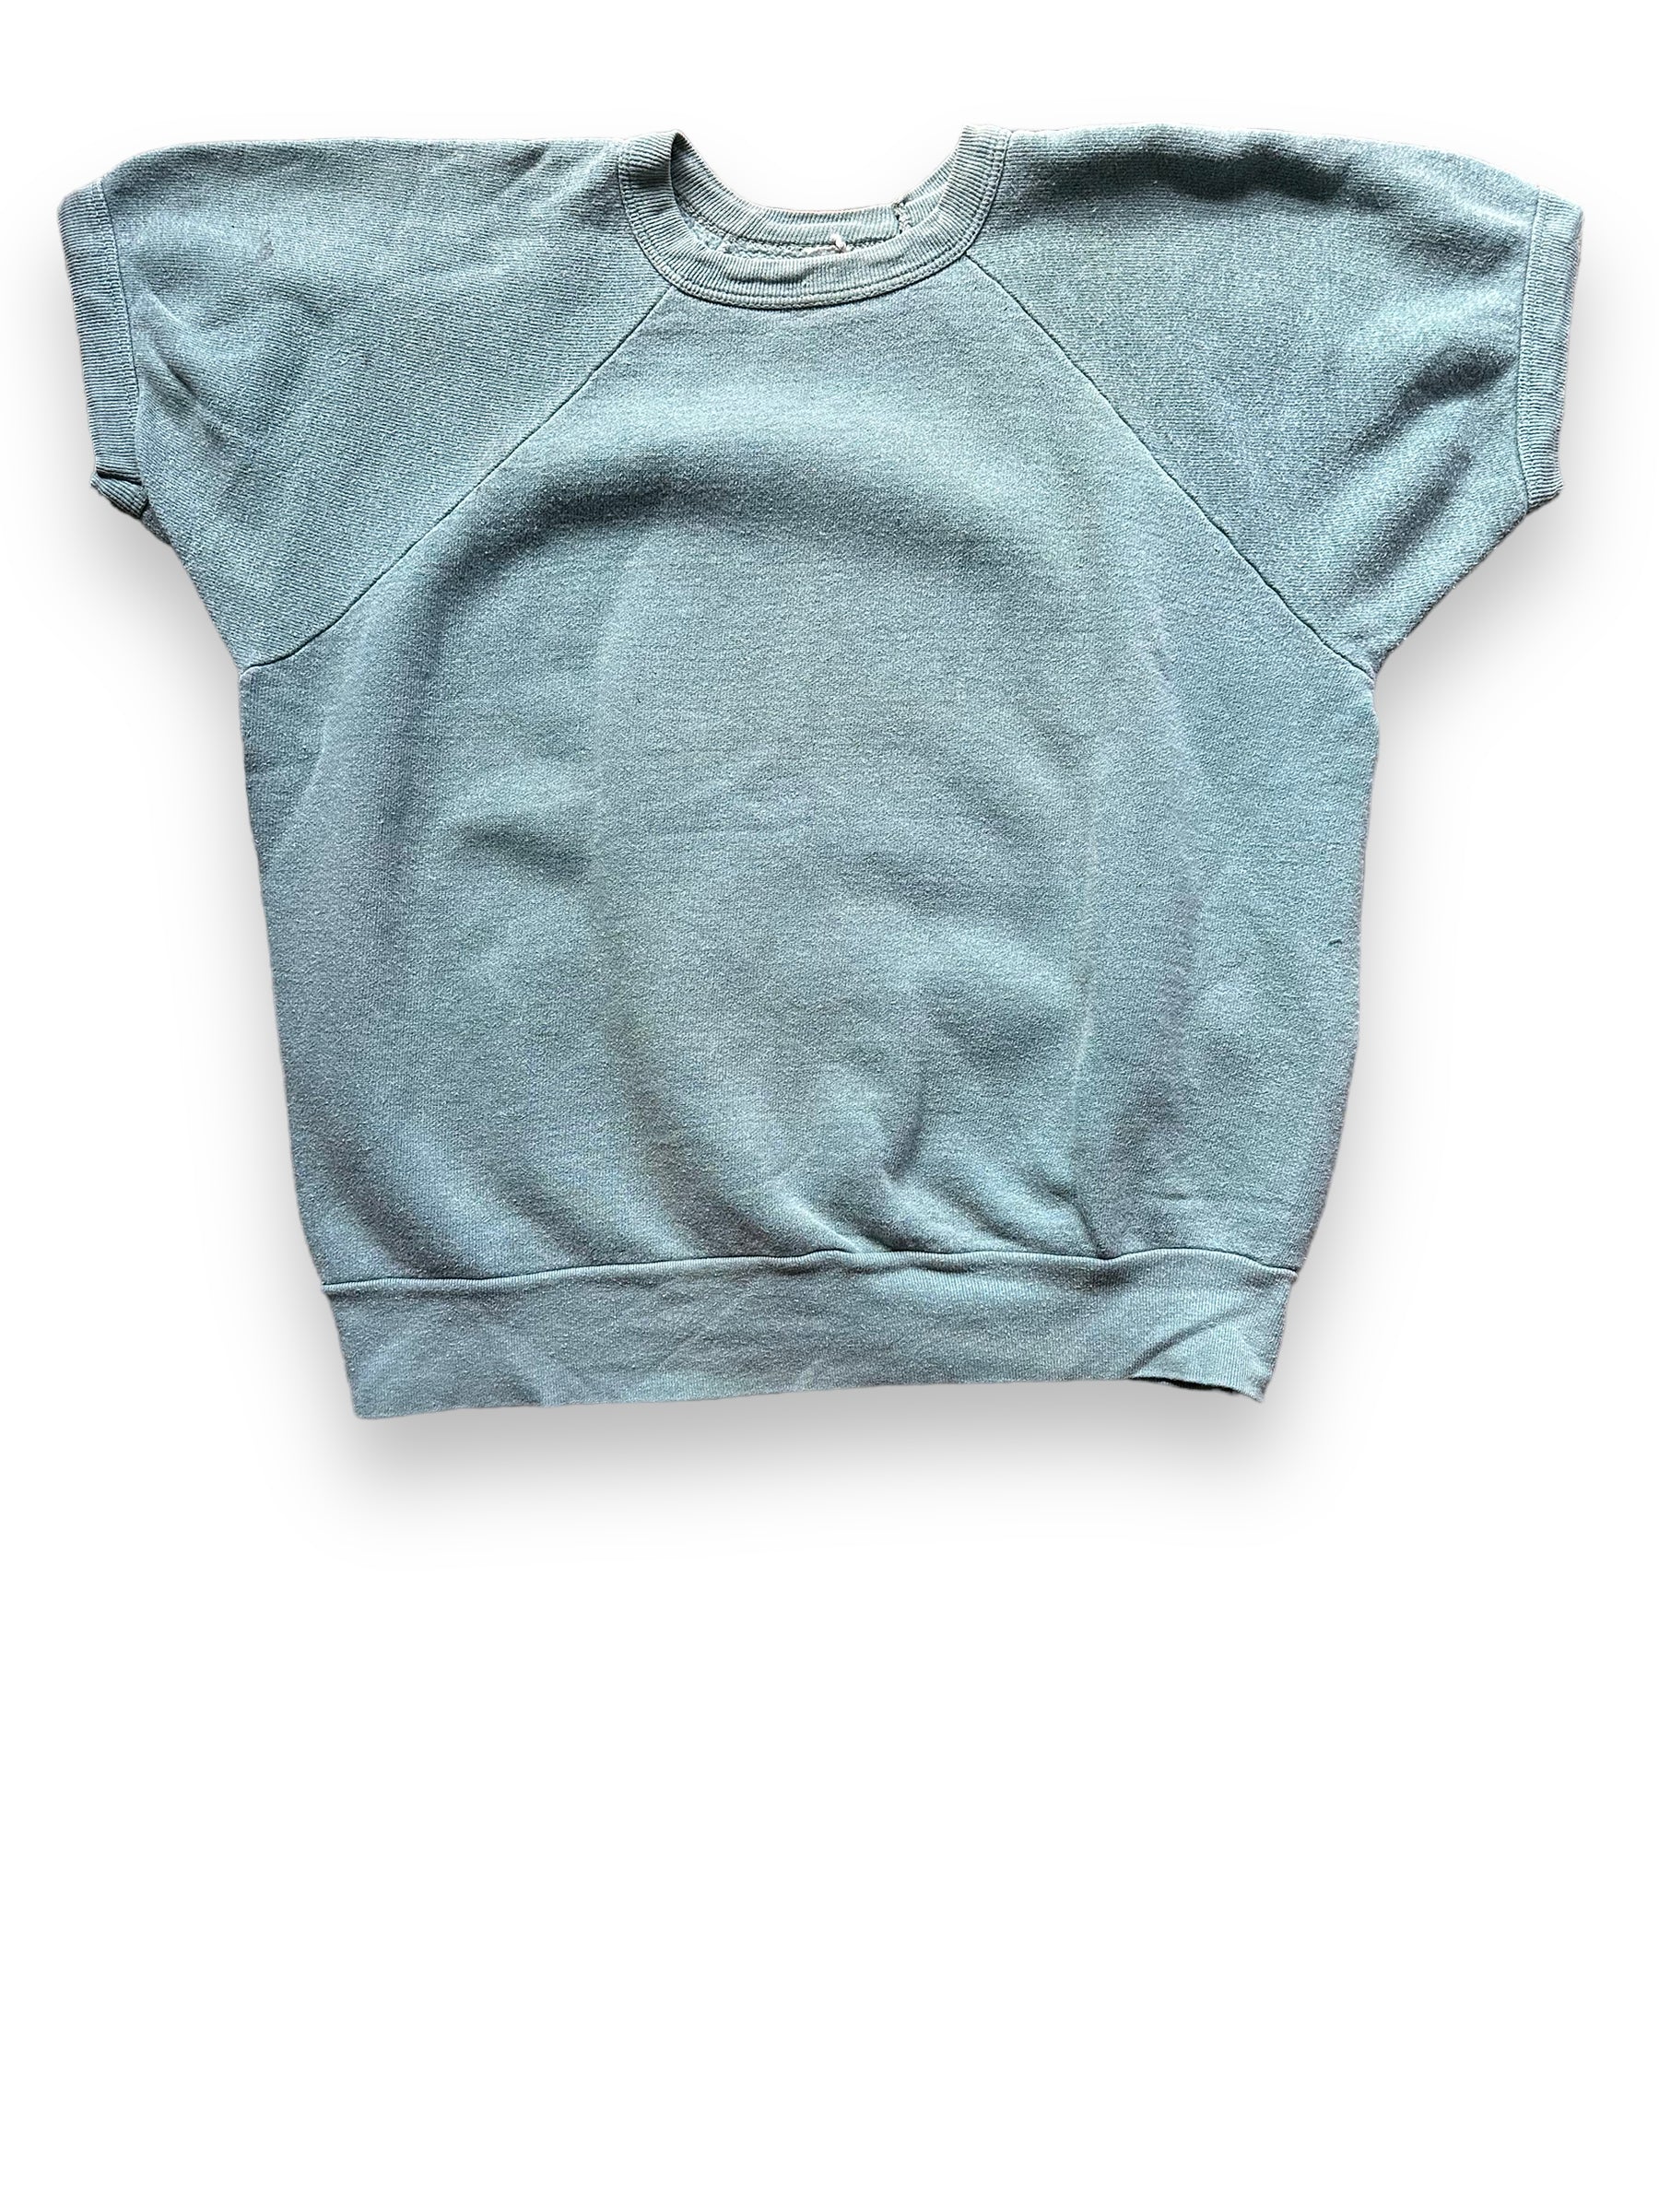 Front View of Vintage Pale Green Short Sleeve Crewneck Sweatshirt SZ M | Barn Owl Vintage Clothing | Seattle Vintage Sweatshirts